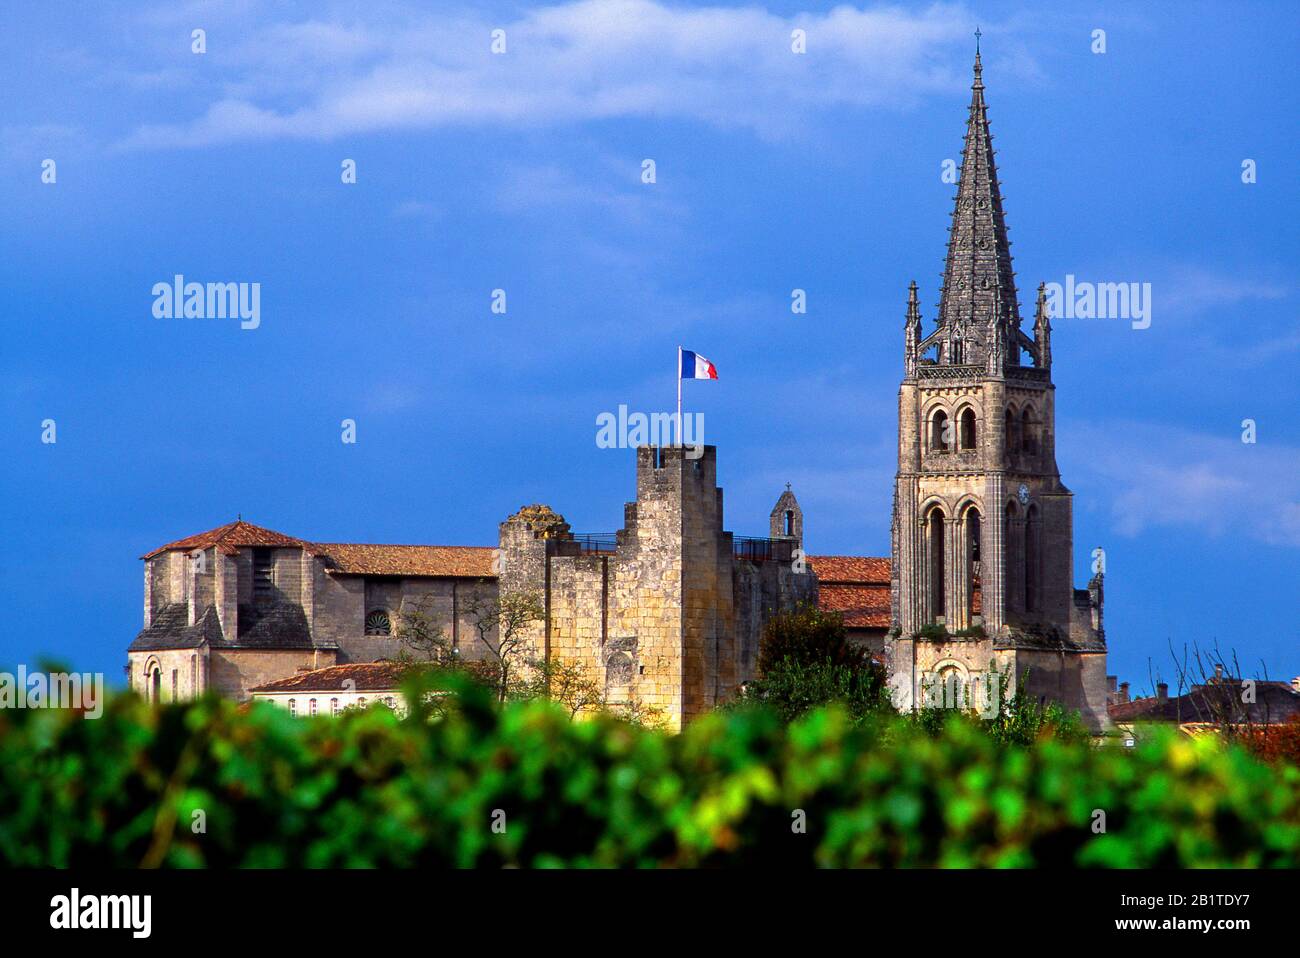 Village and vineyard of Saint-Emilion, Gironde, France, Europe Stock Photo